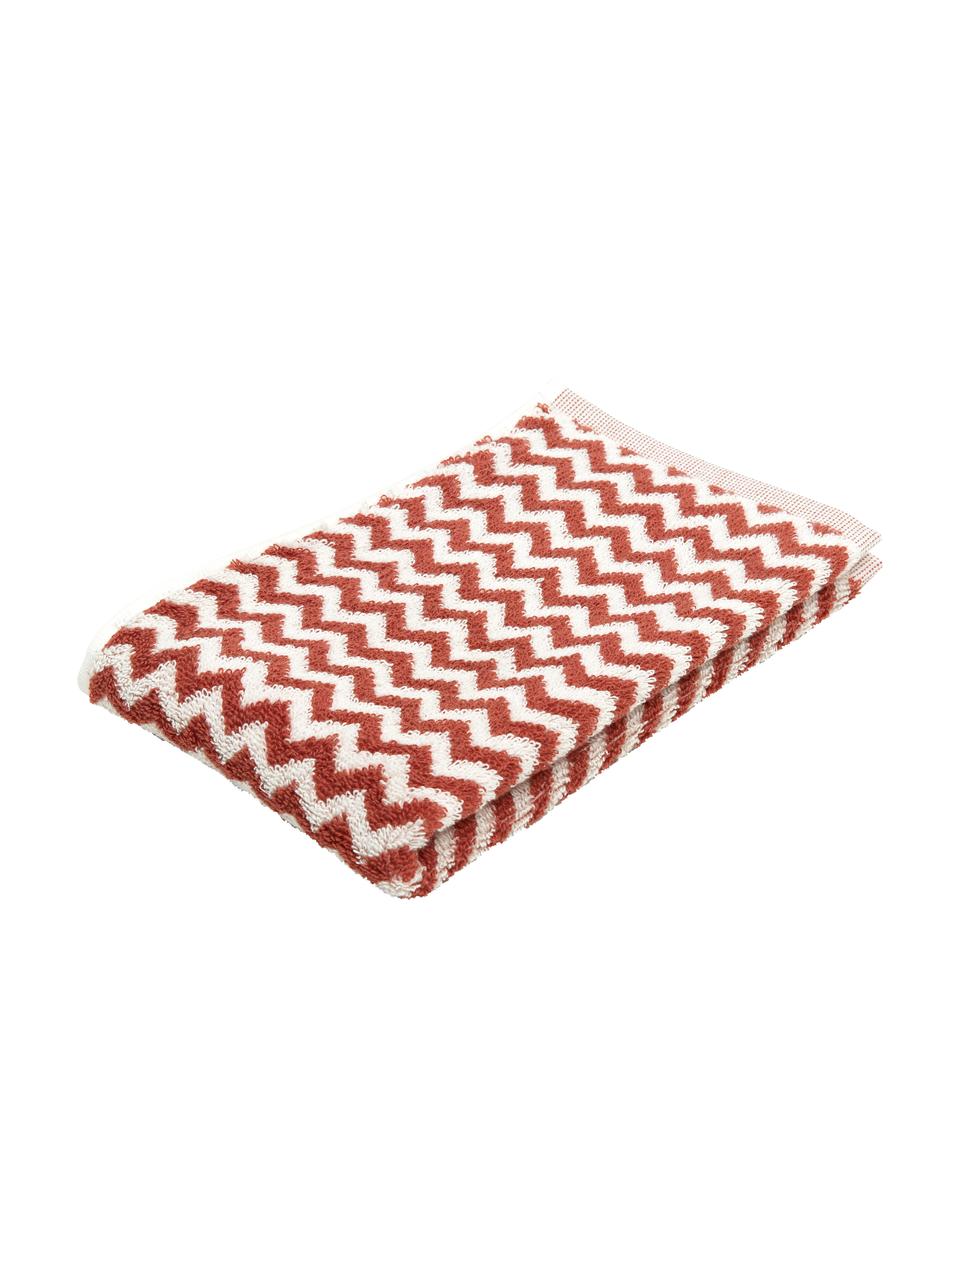 Handdoek Liv met zigzag patroon, 100% katoen, middelzware kwaliteit, 550 g/m², Terracottakleurig, crèmewit, Gastendoekje